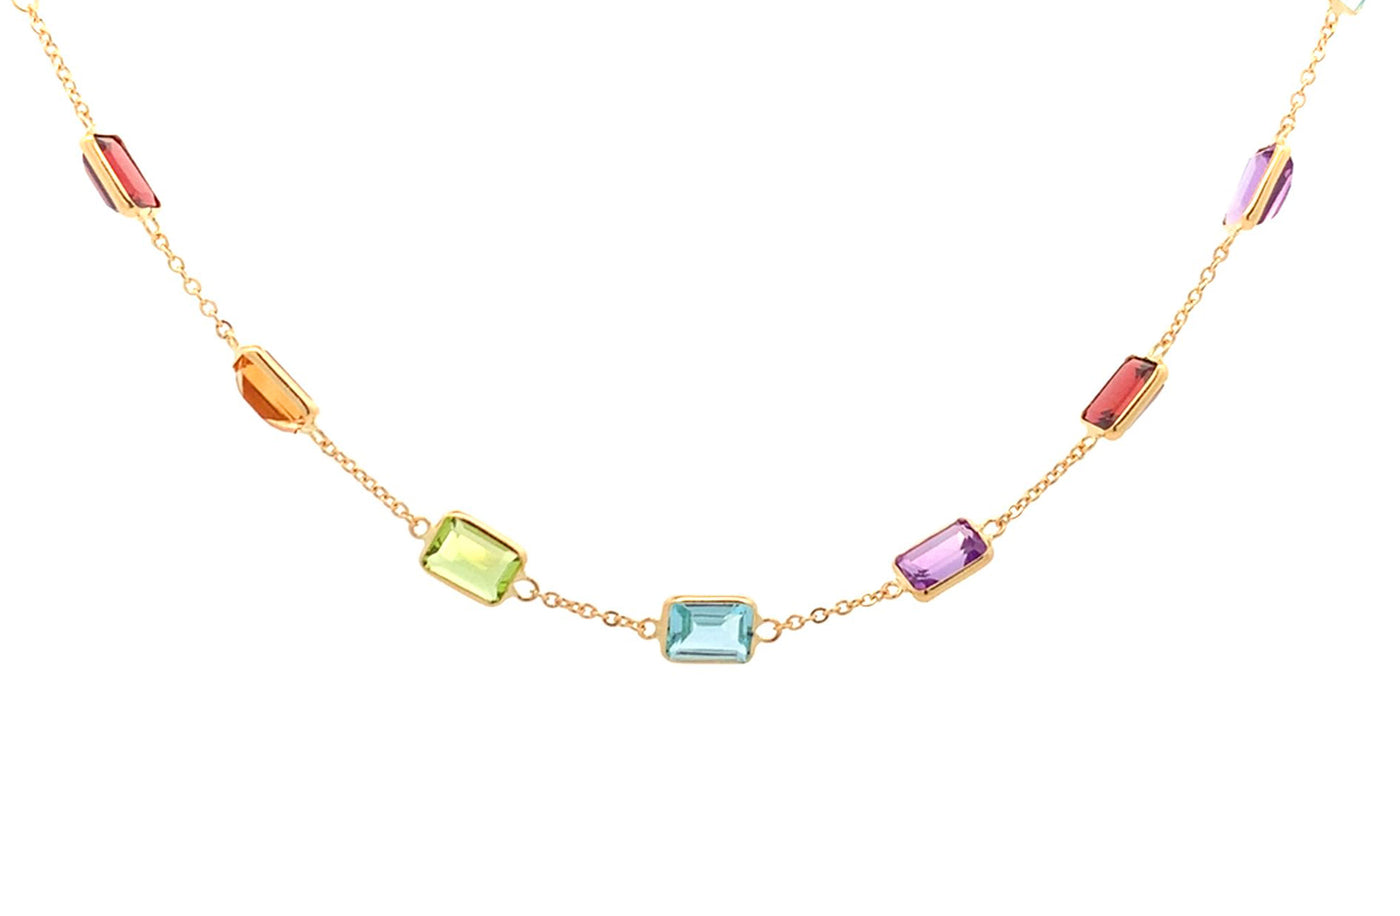 Emerald Cut Coloured Gemstone Necklace in Gold